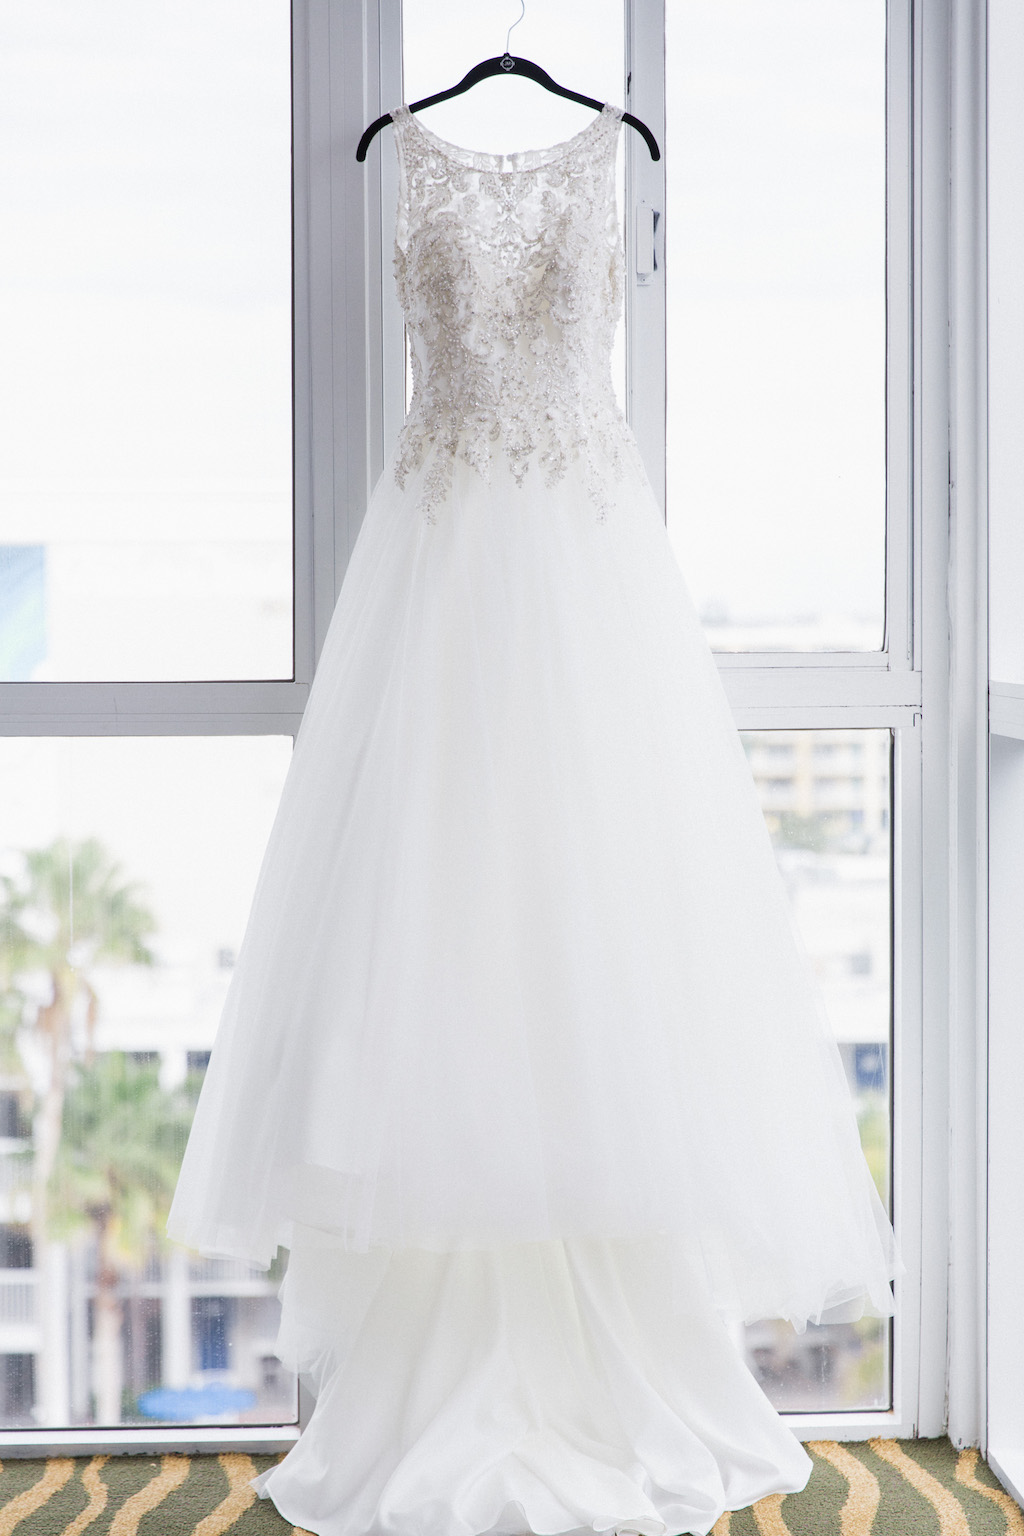 Illusion Lace Princess Ballgown Wedding Dress on Hanger